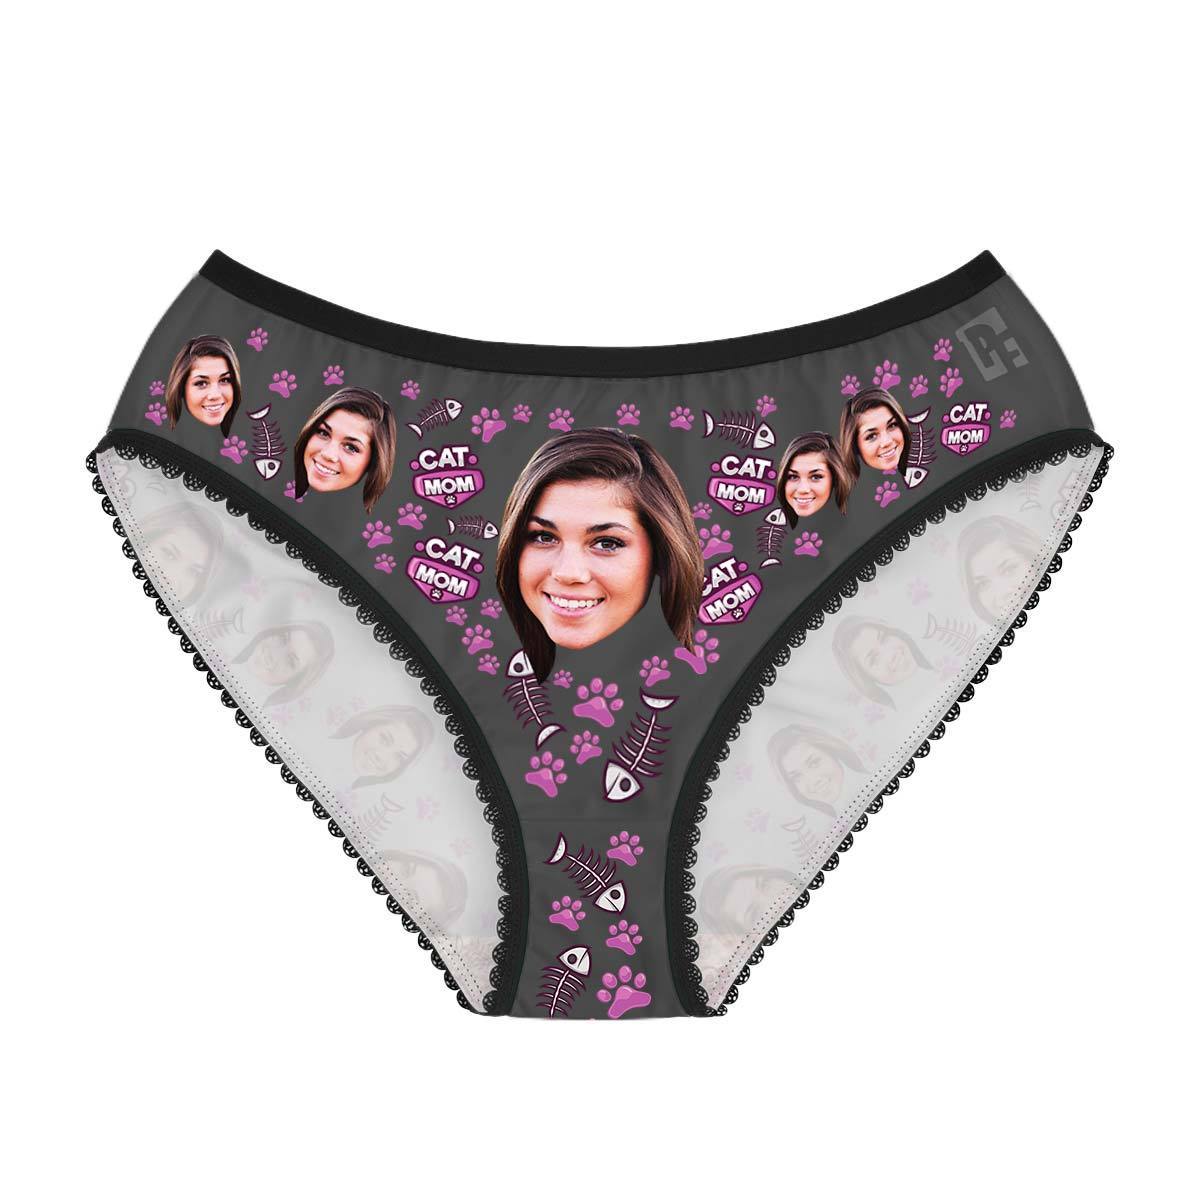 Dark Cat Mom women's underwear briefs personalized with photo printed on them